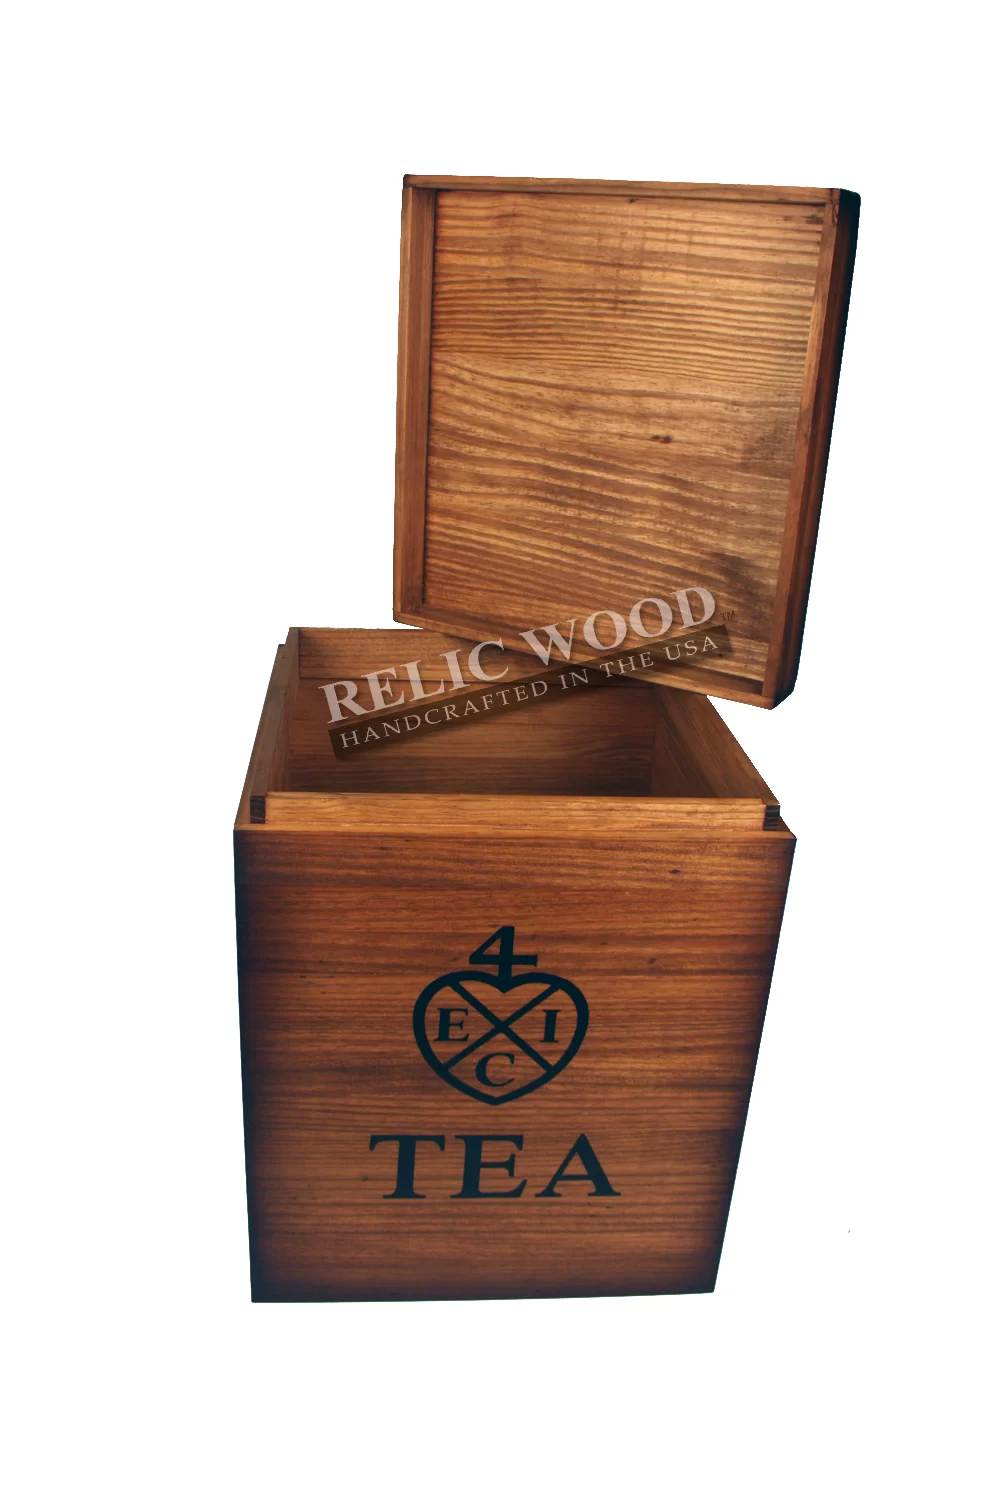 East India Trading Tea Box Replica Relic Wood